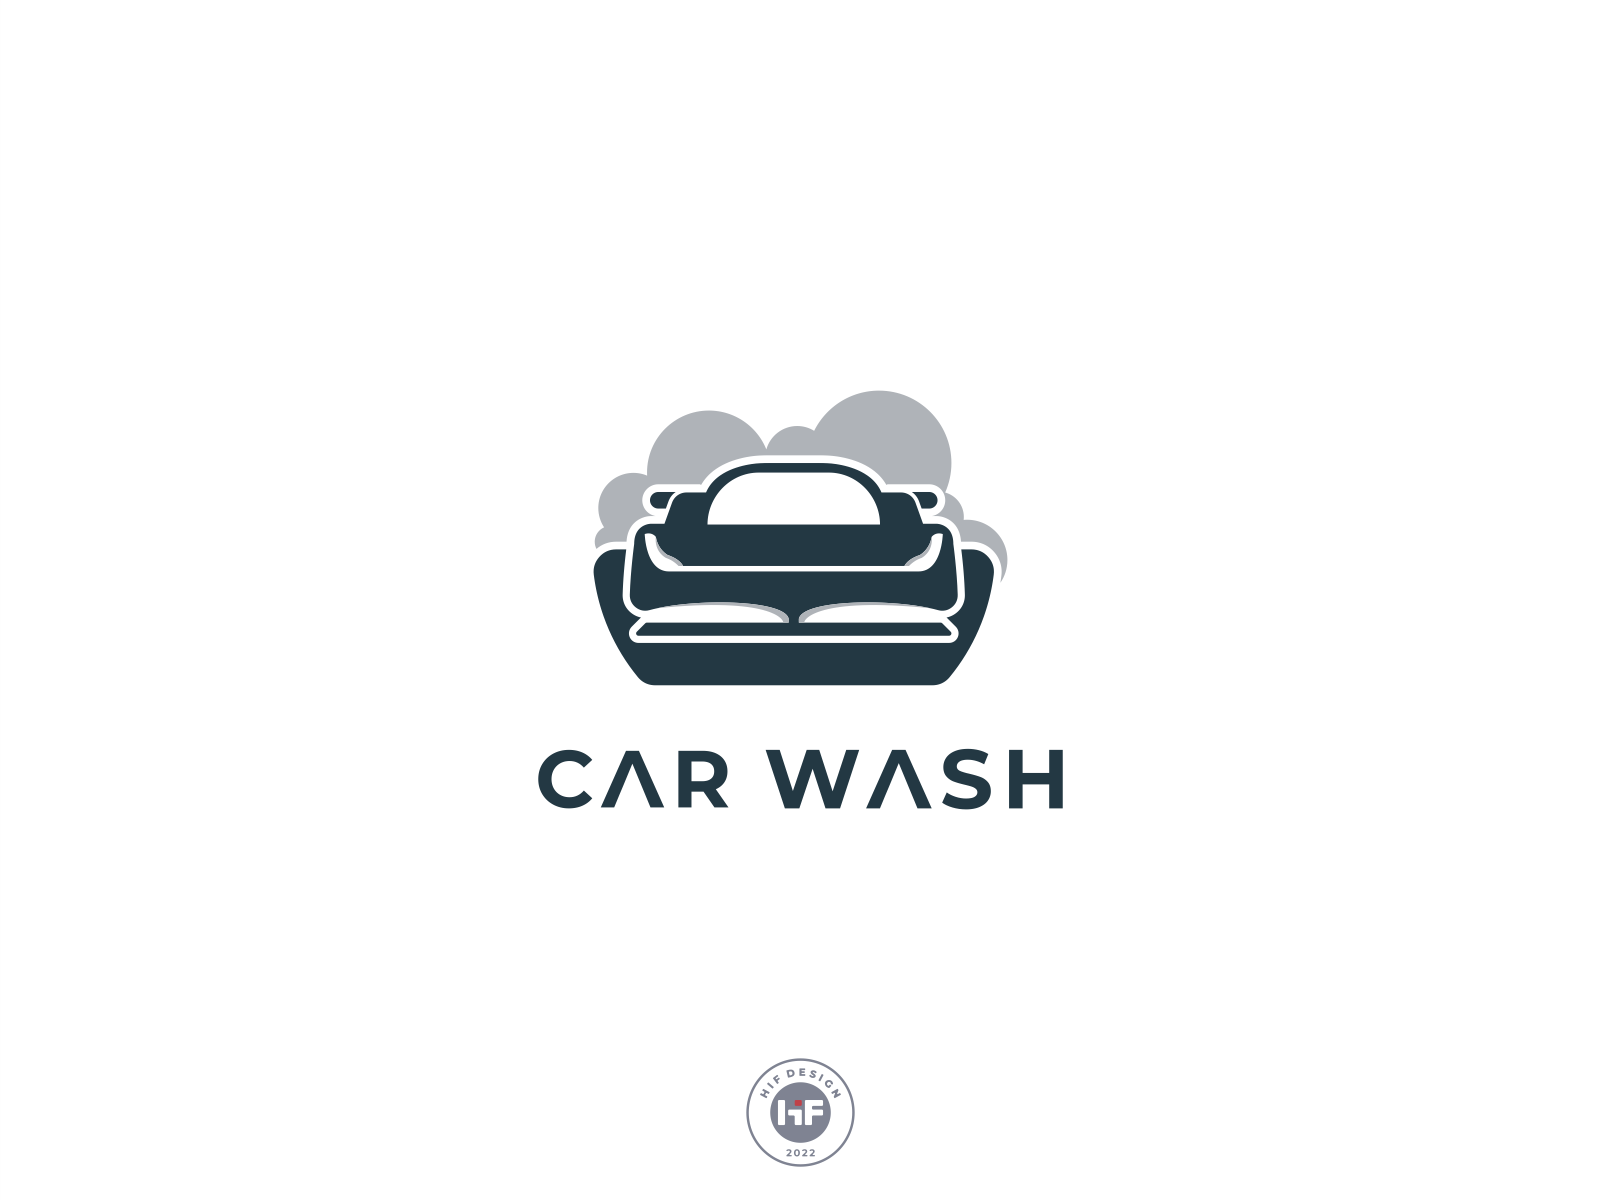 Car Wash Logo Vector Art PNG, Car Wash An Illustration Of Logo, Car  Service, Service Car, Car Wash PNG Image For Free Download